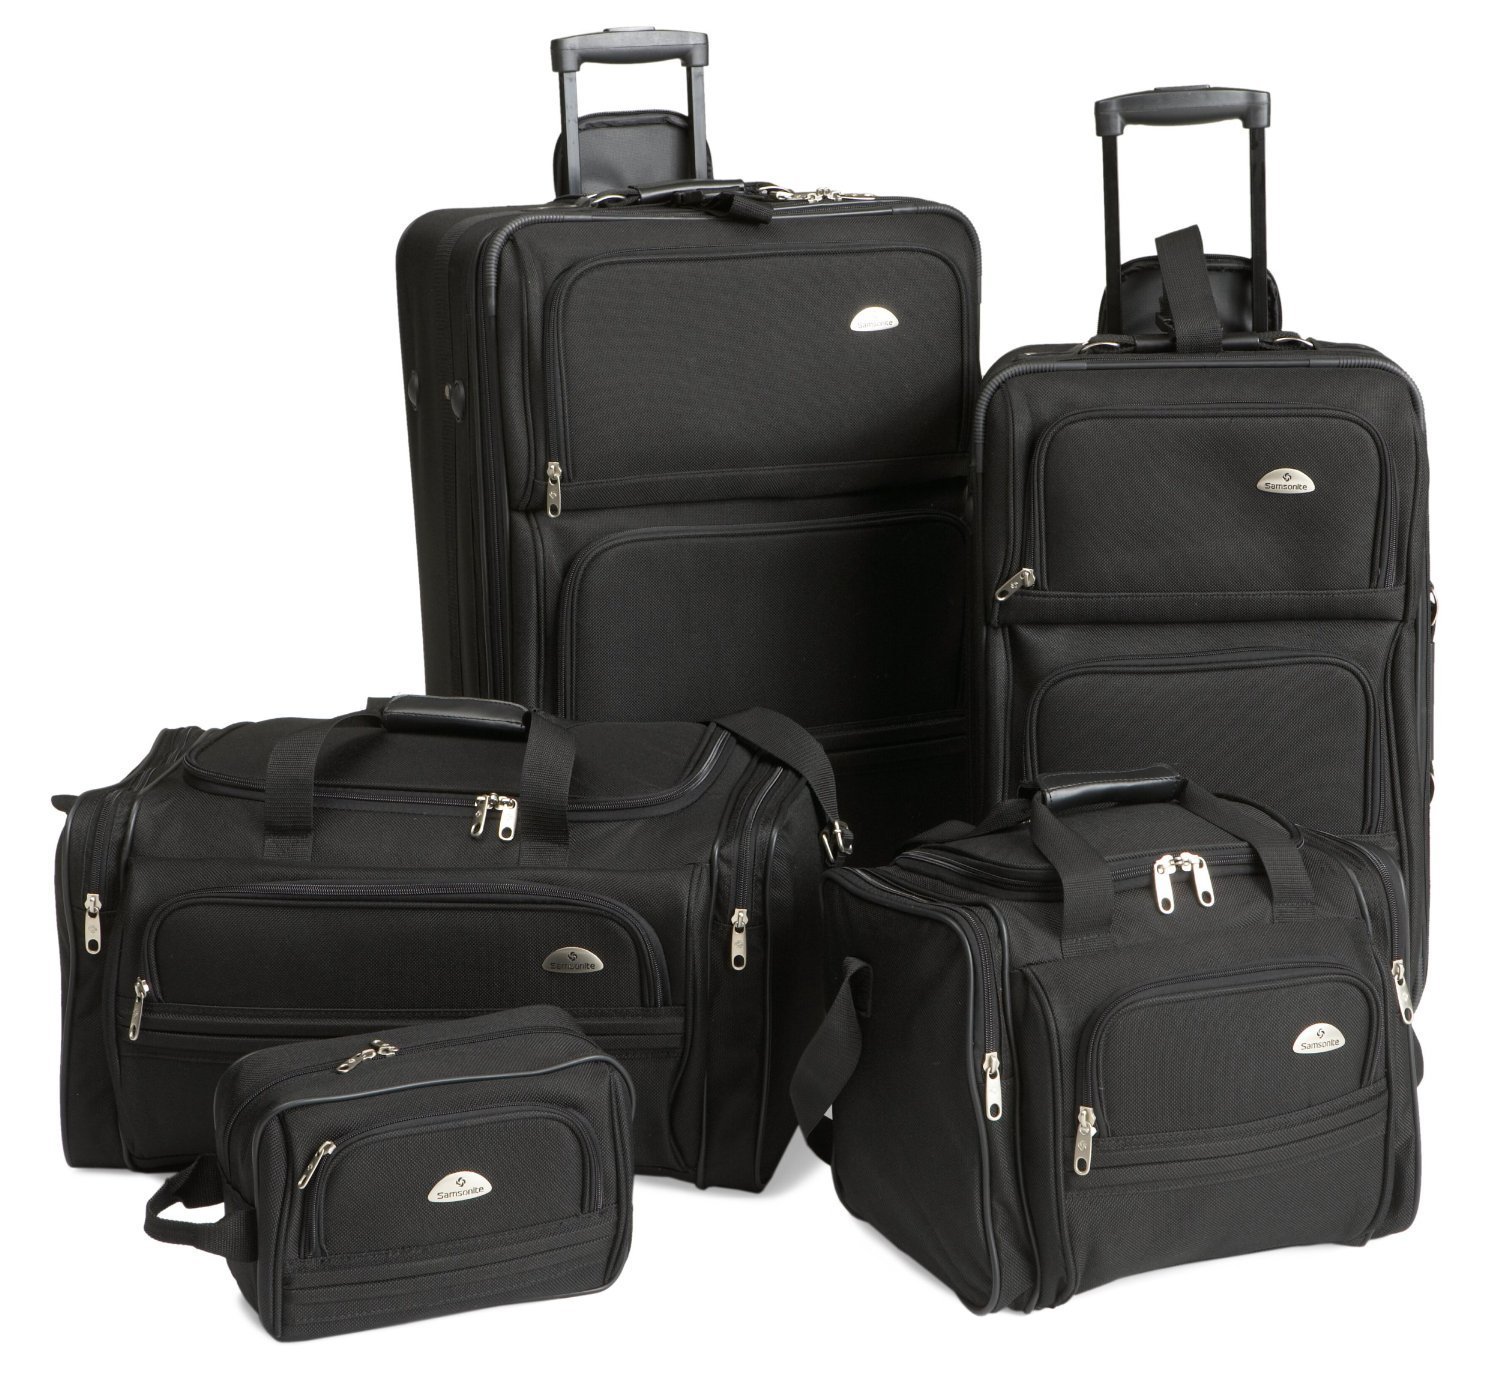 Samsonite Luggage Set